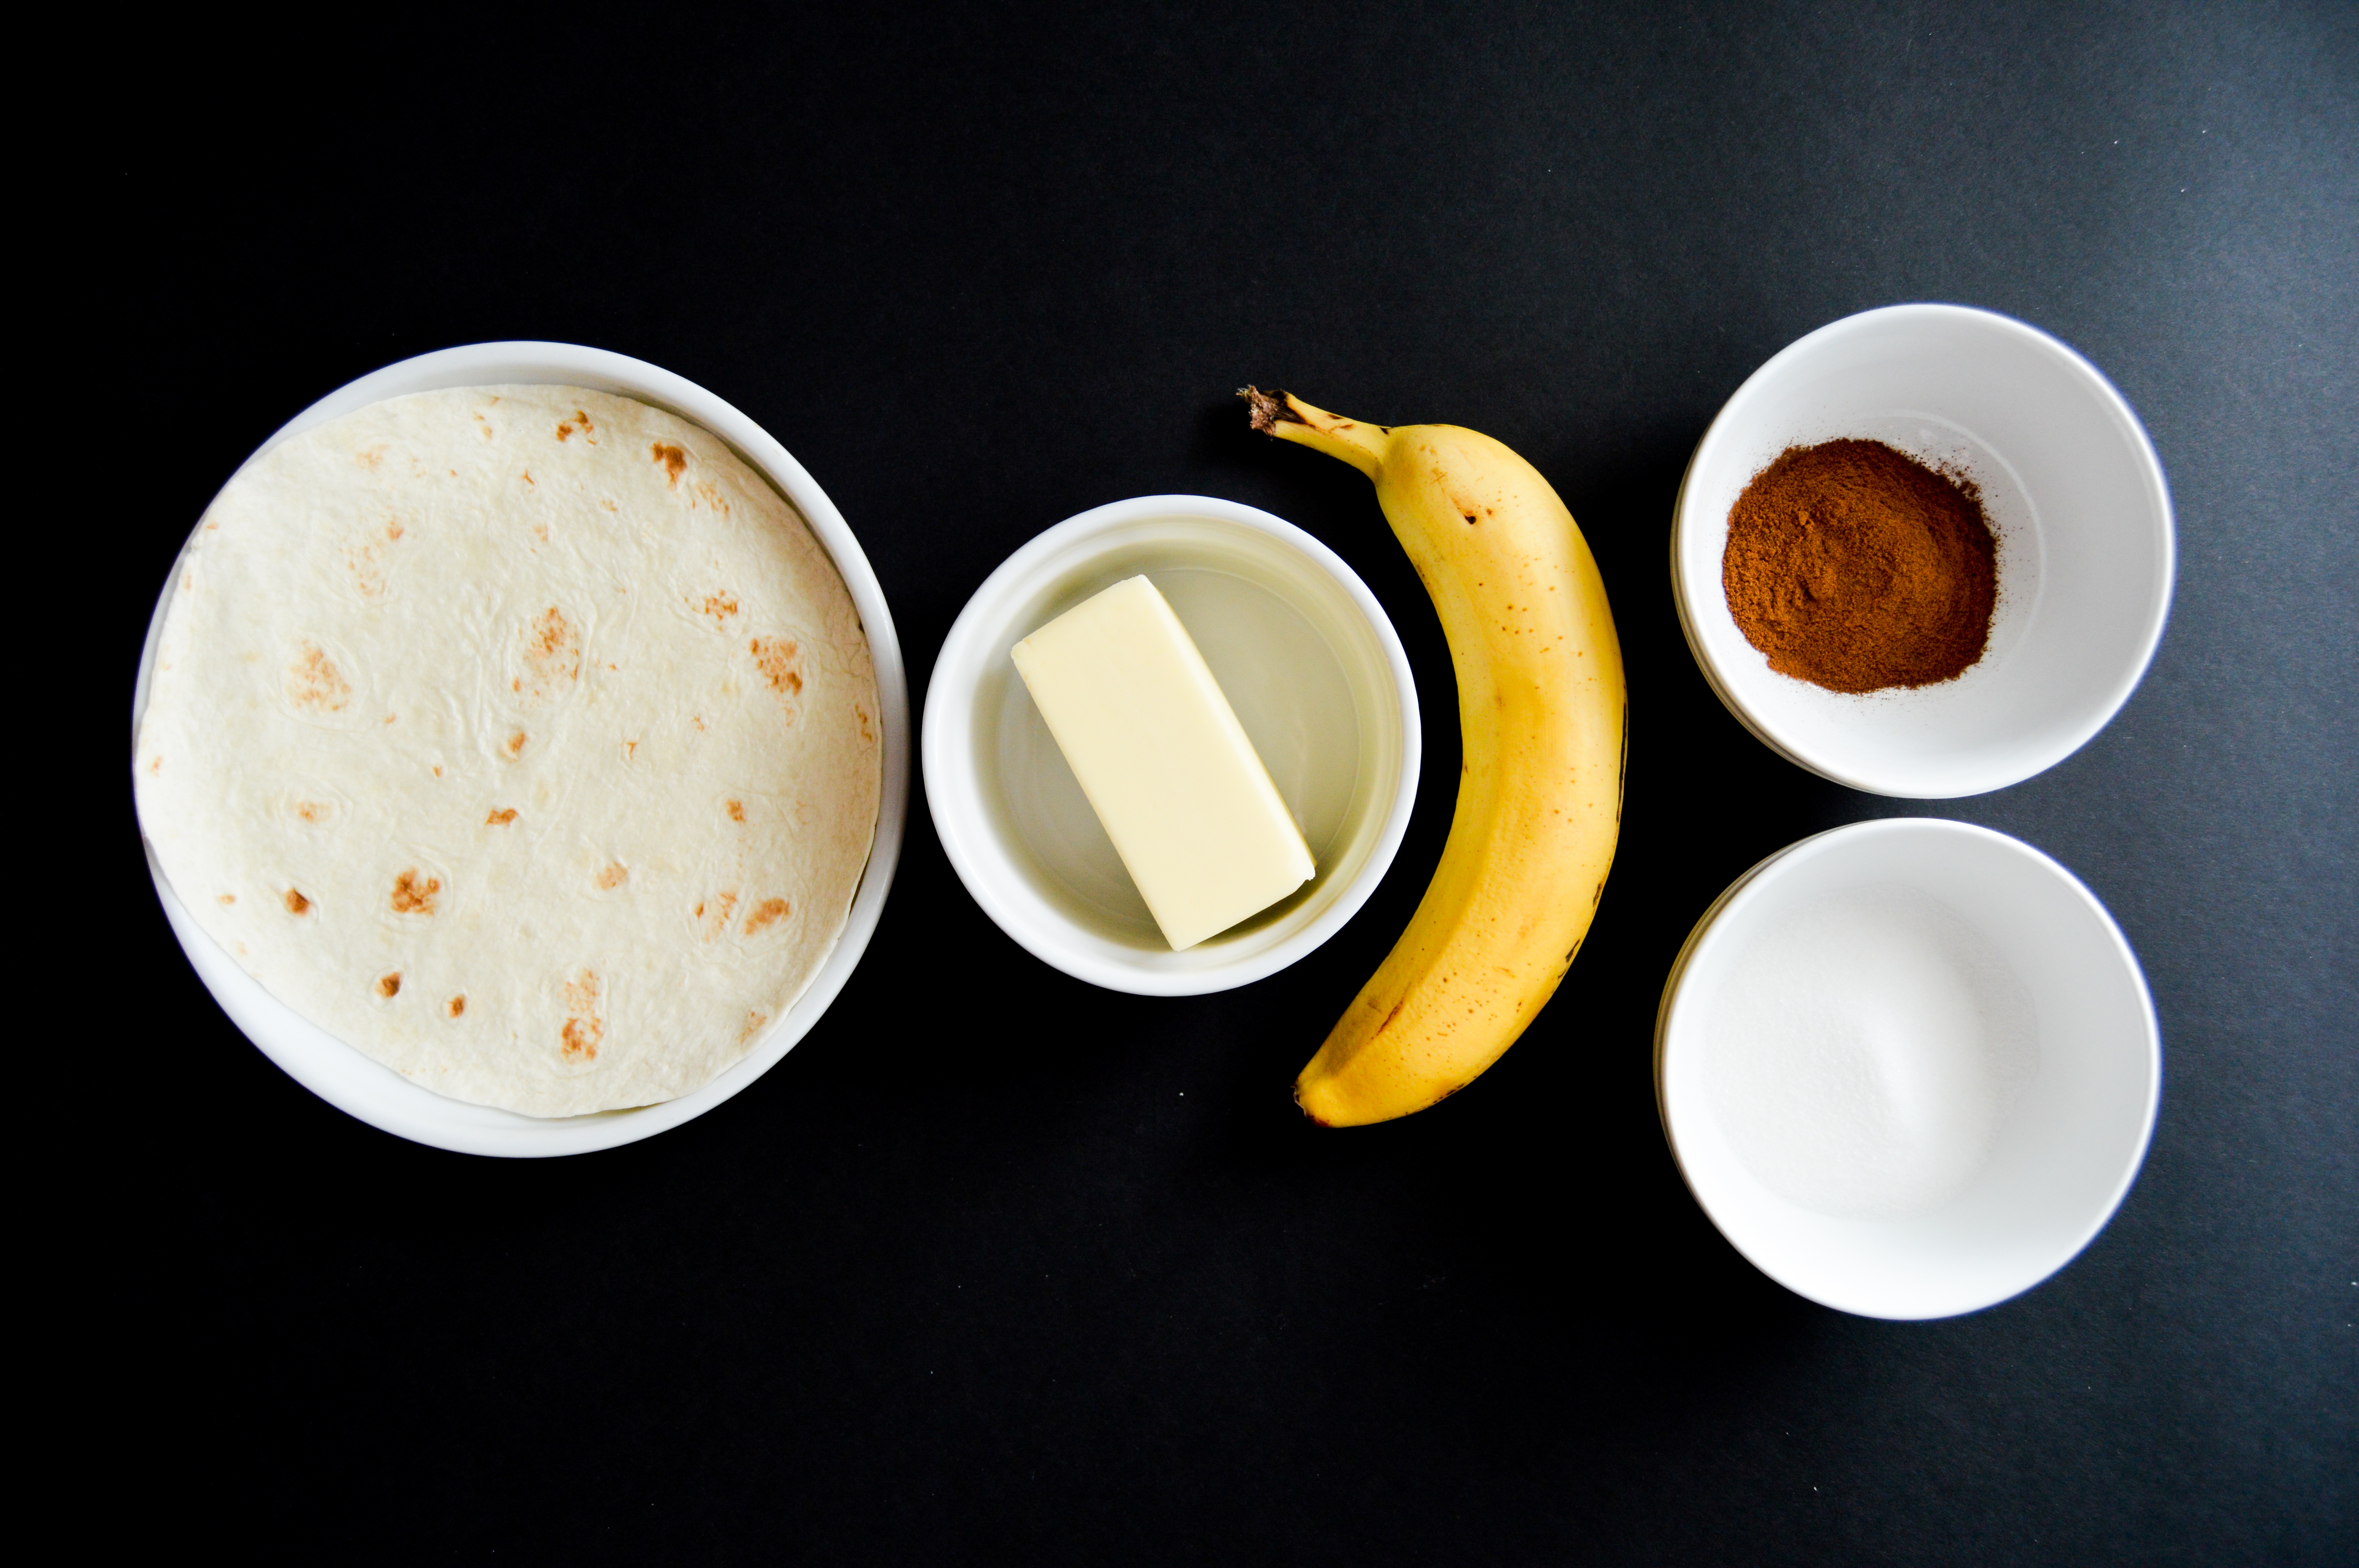 Ingredients for banana cinnamon sugar tortilla roll ups